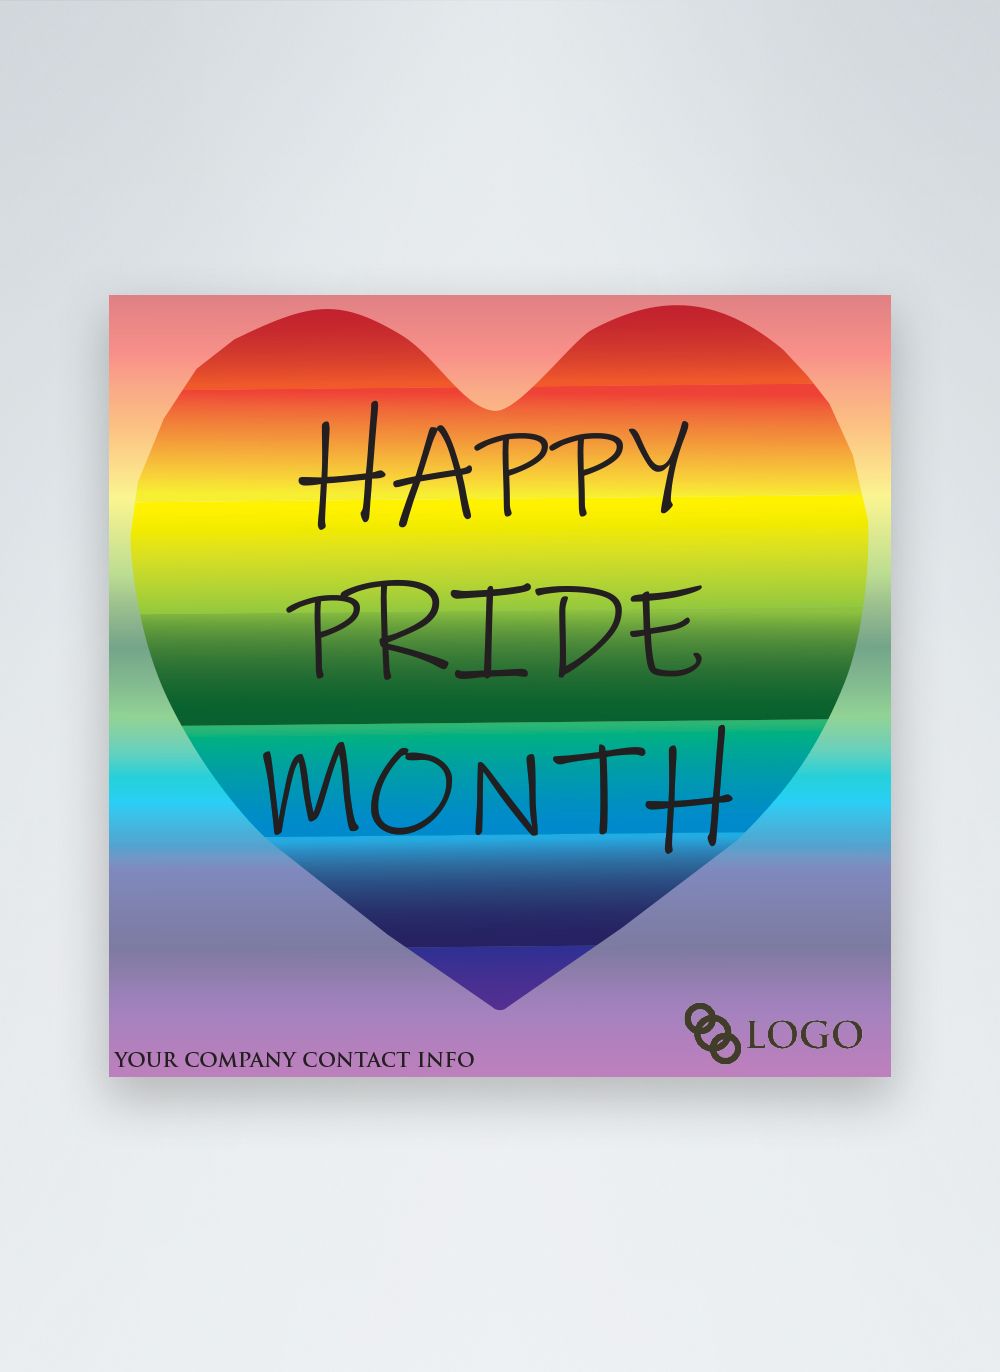 Happy pride month lgbt social media post image_picture free download 450013633_lovepik.com